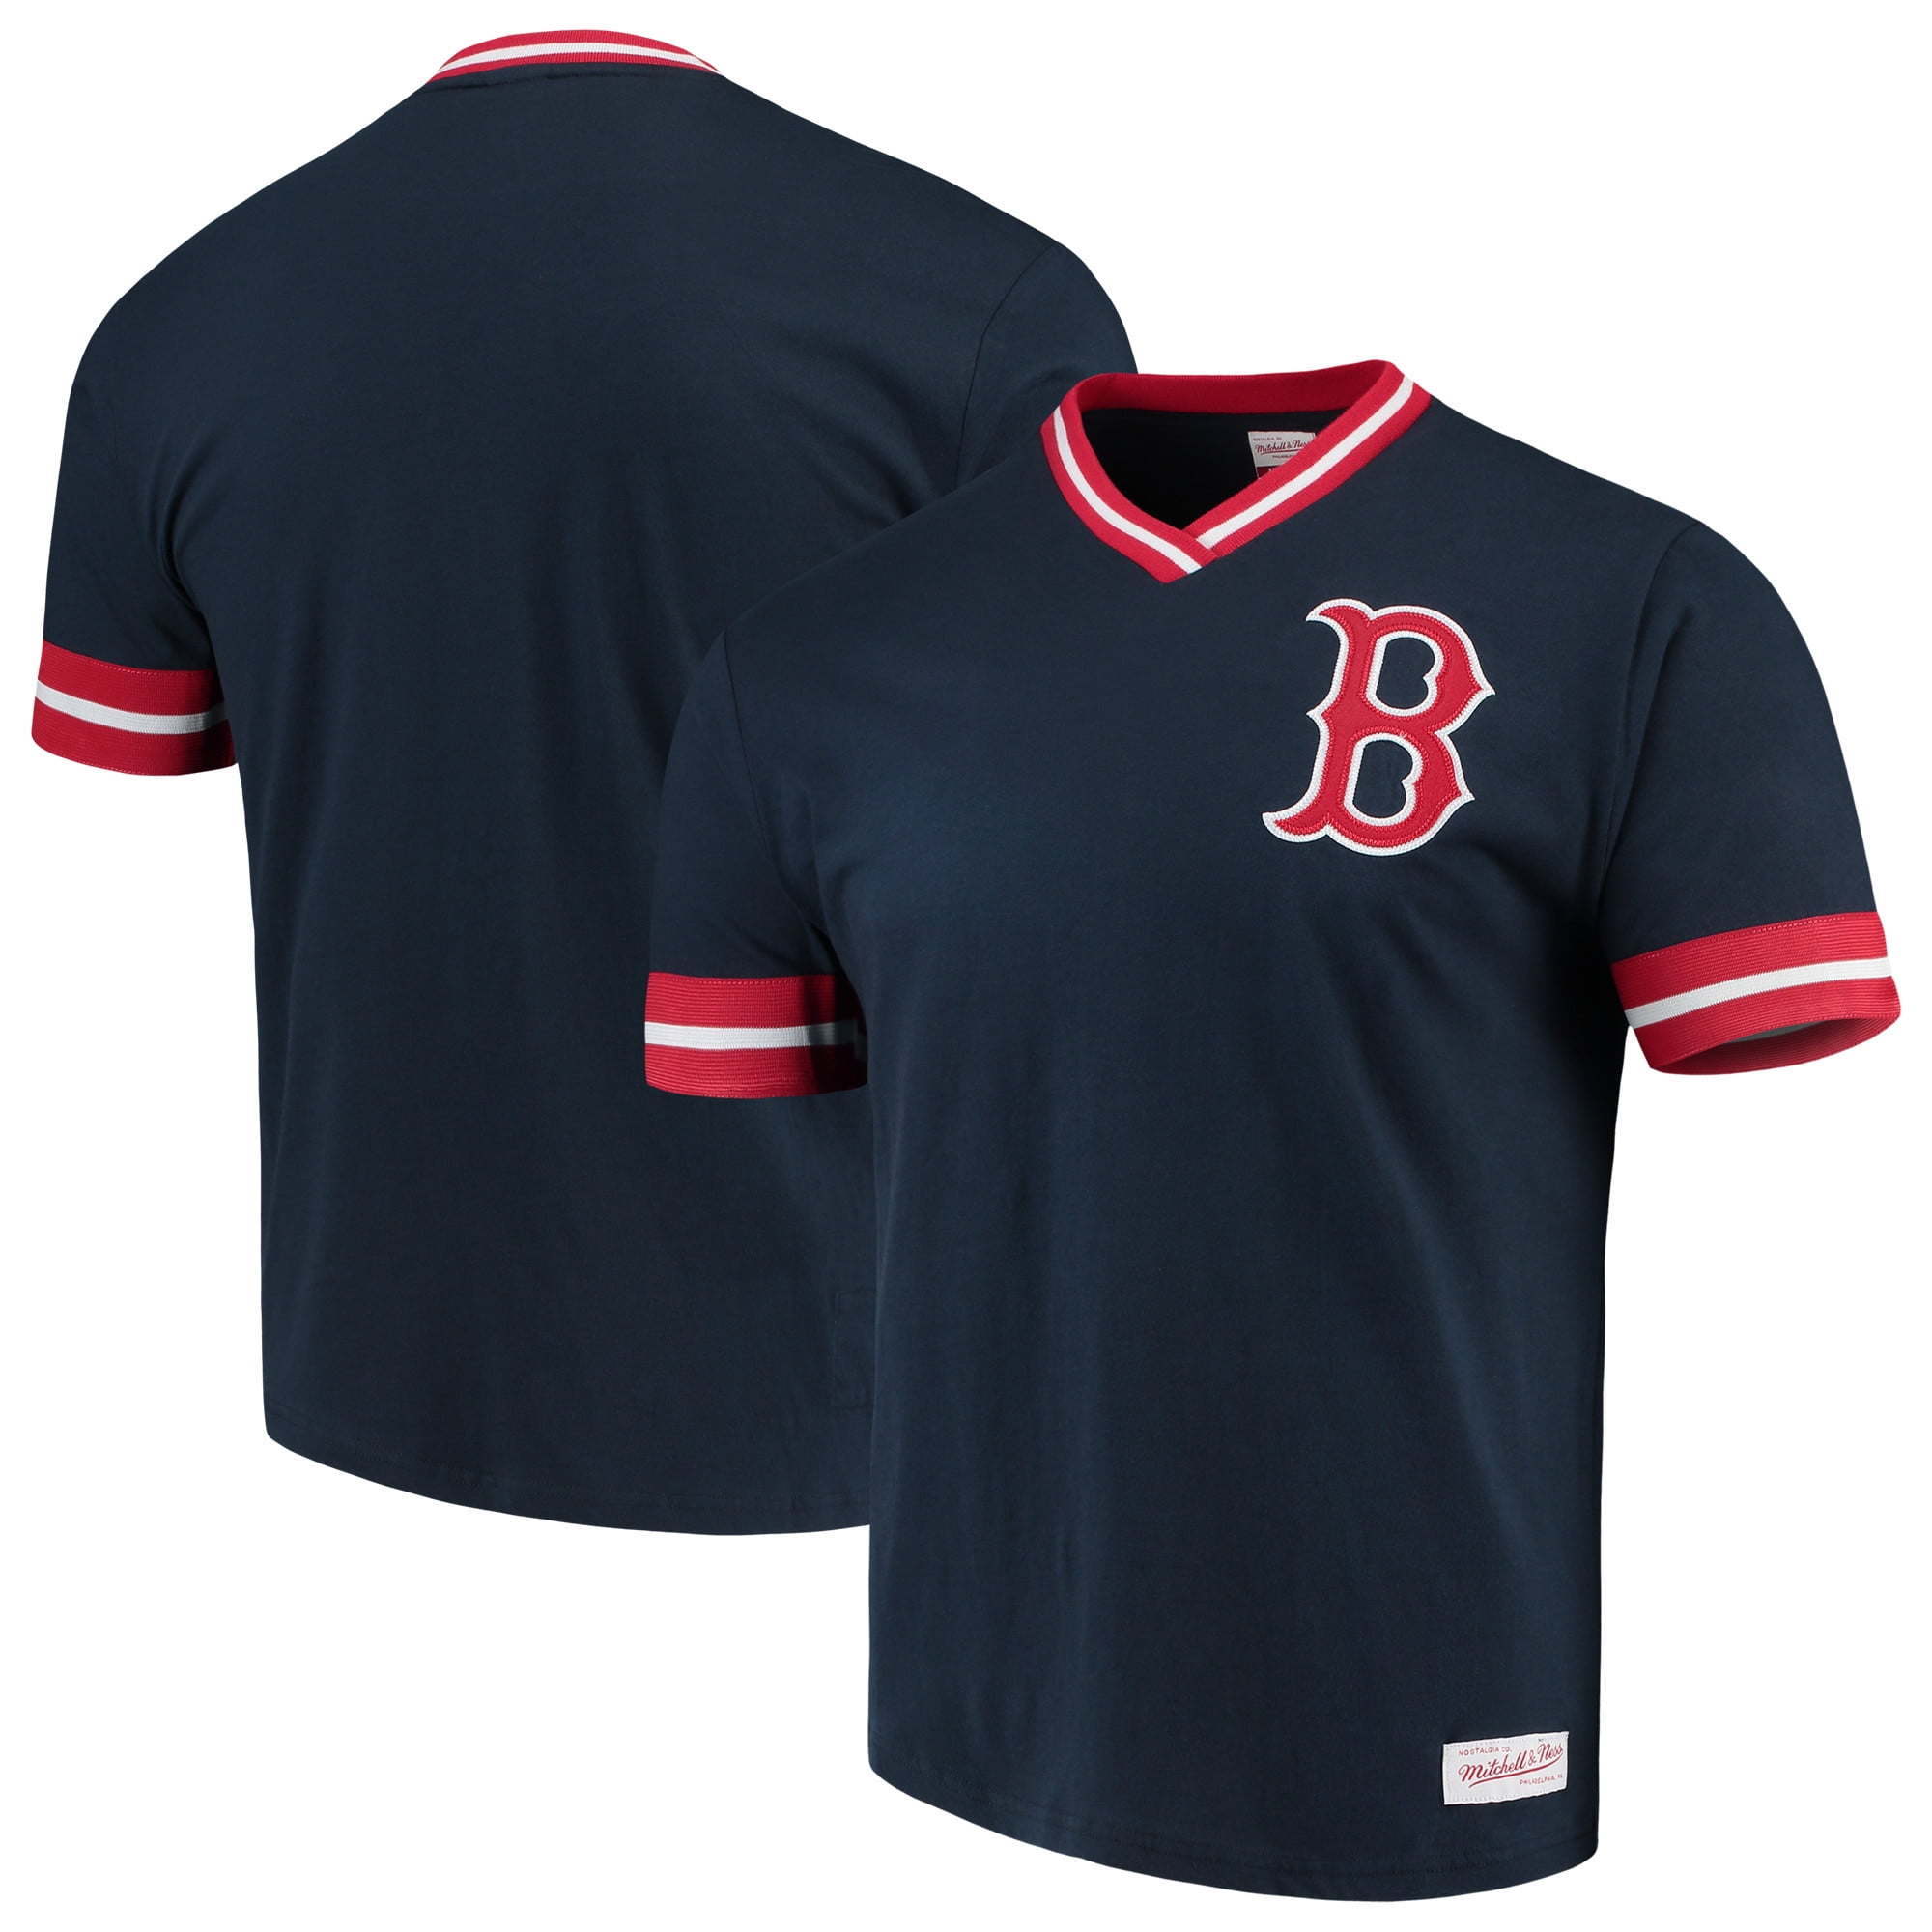 vintage boston red sox jersey